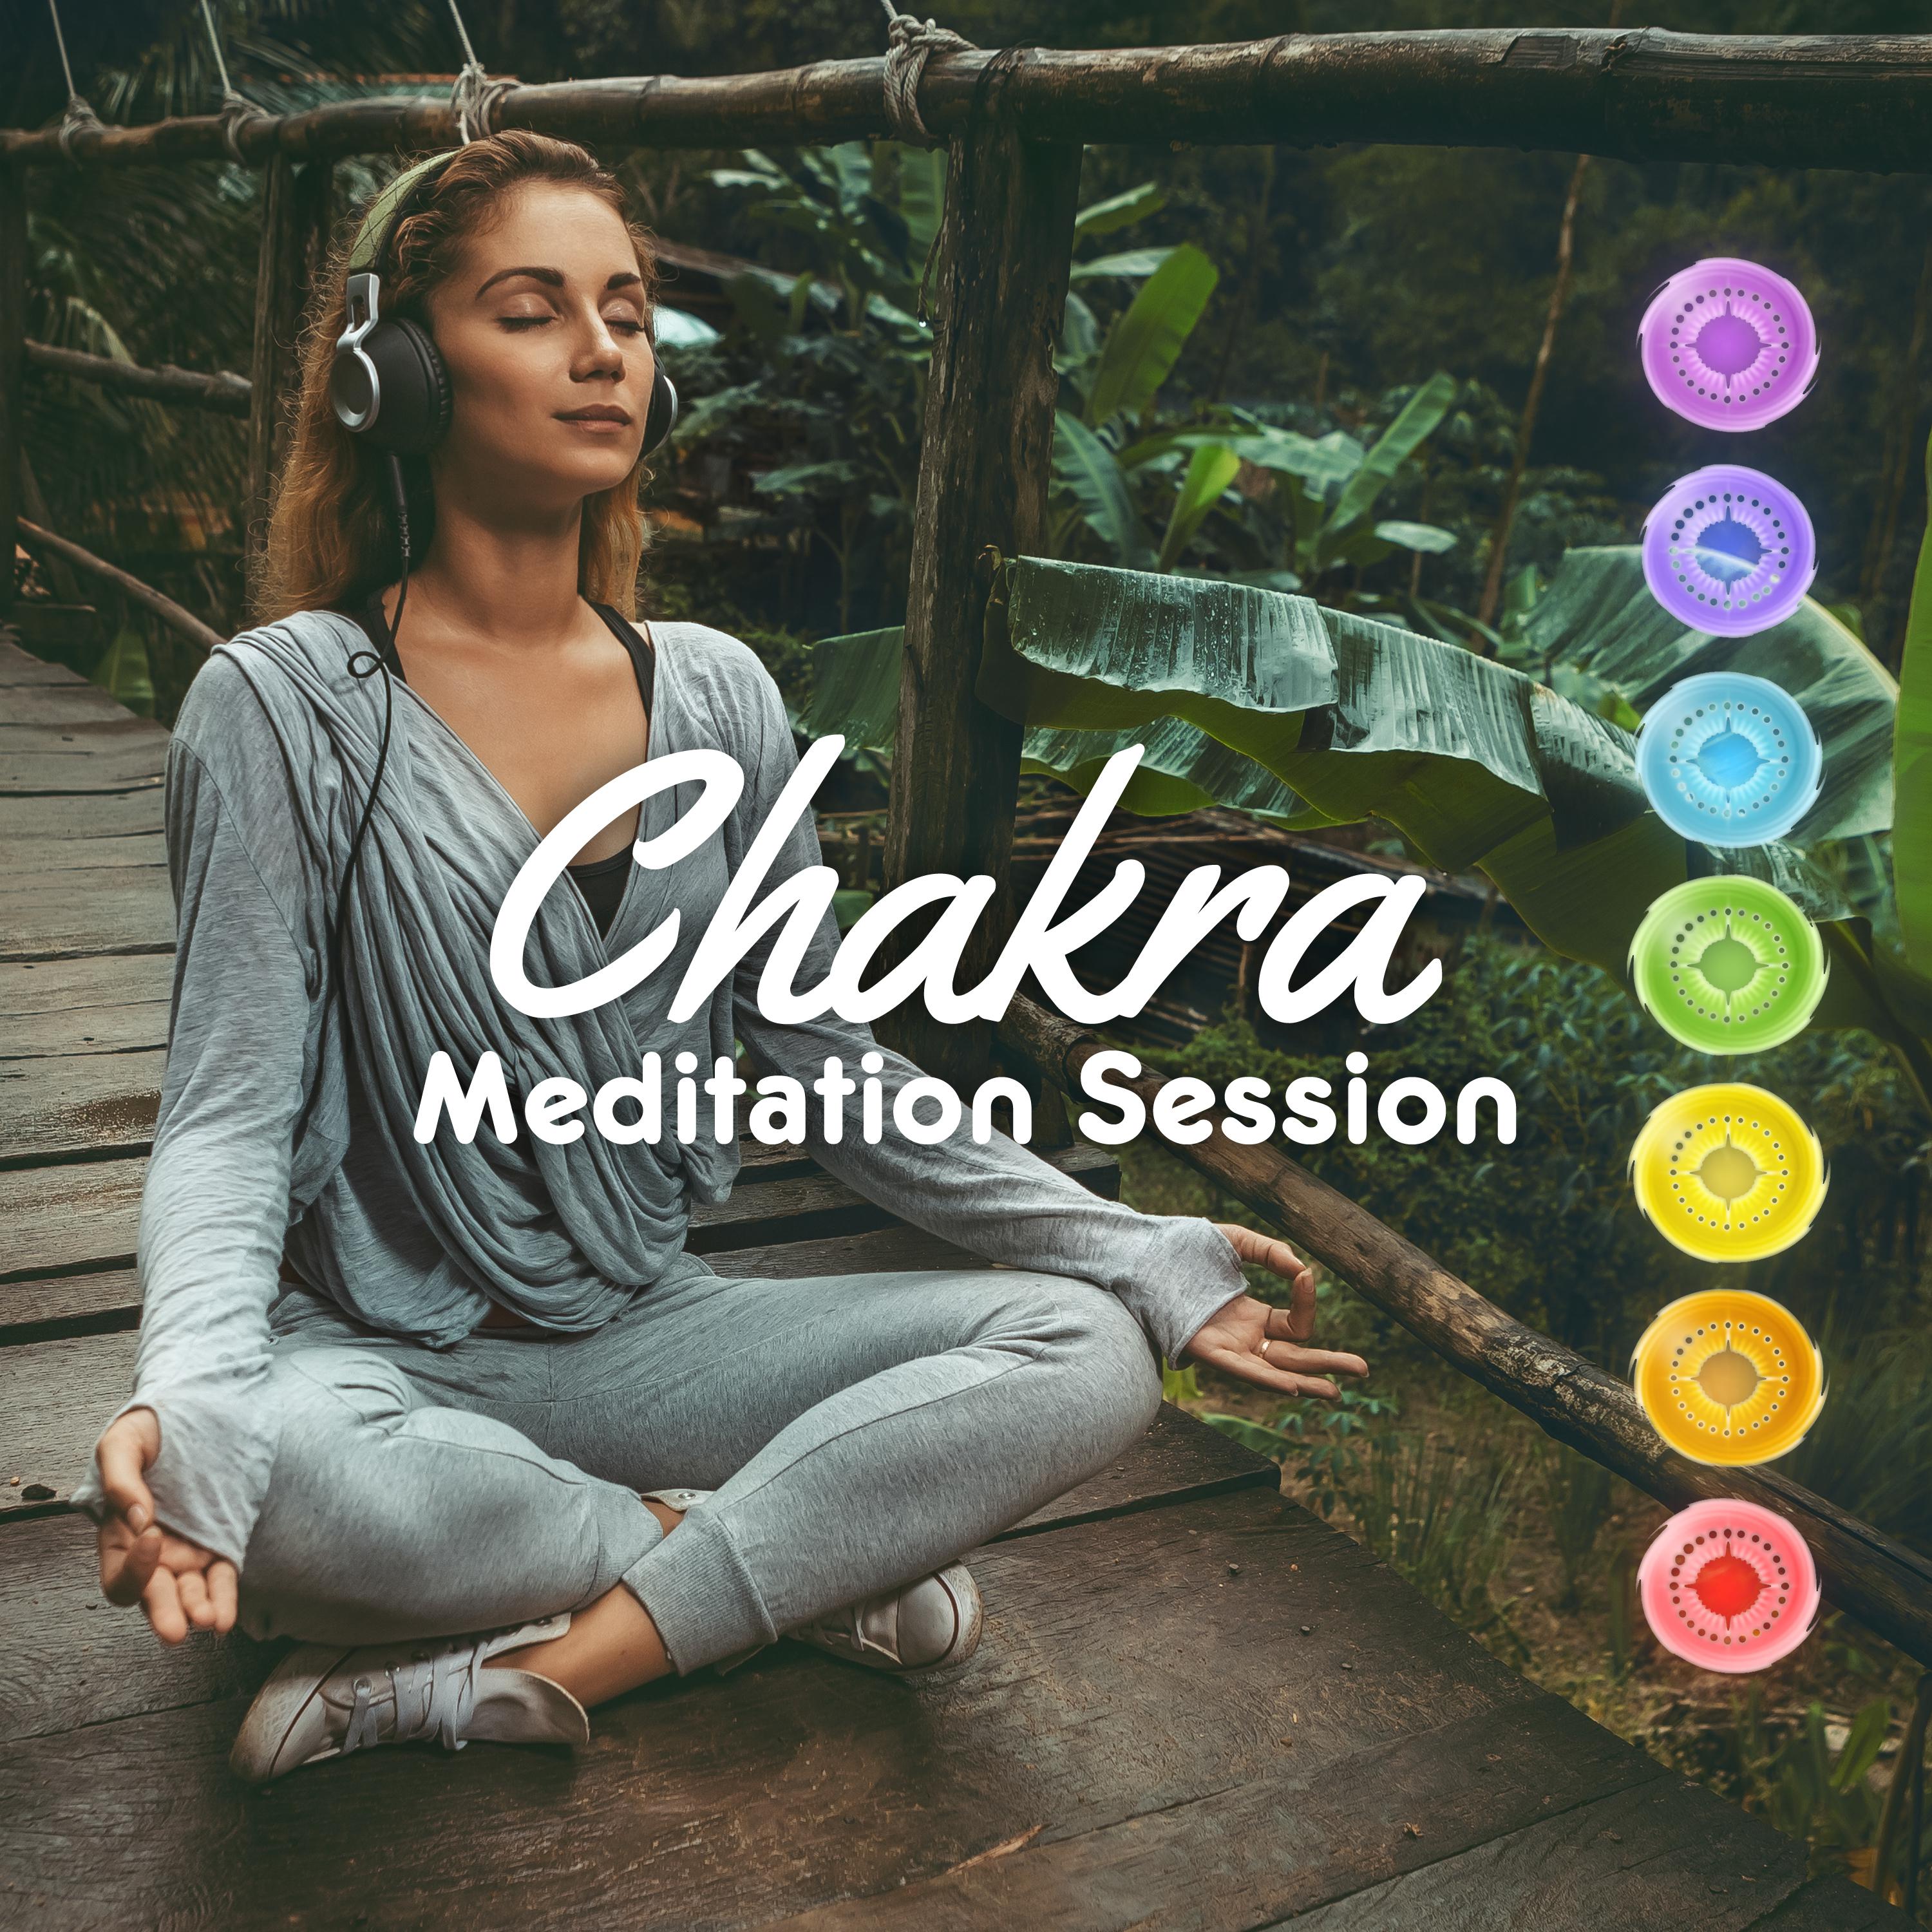 Chakra Meditation Session (Visualization, Concentration, Harmony)